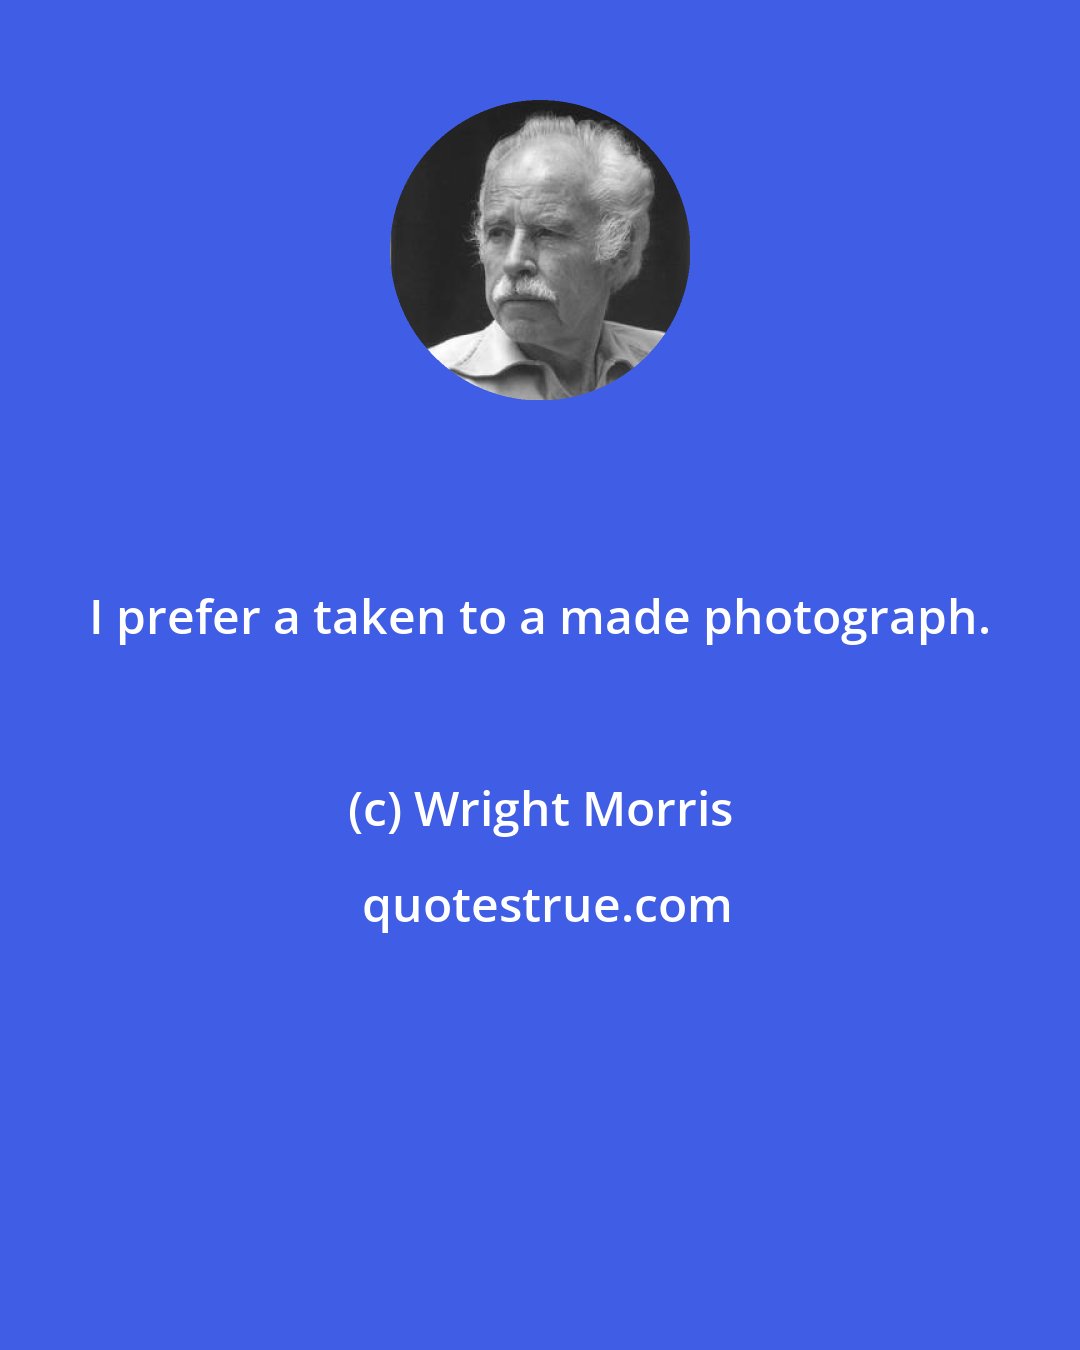 Wright Morris: I prefer a taken to a made photograph.